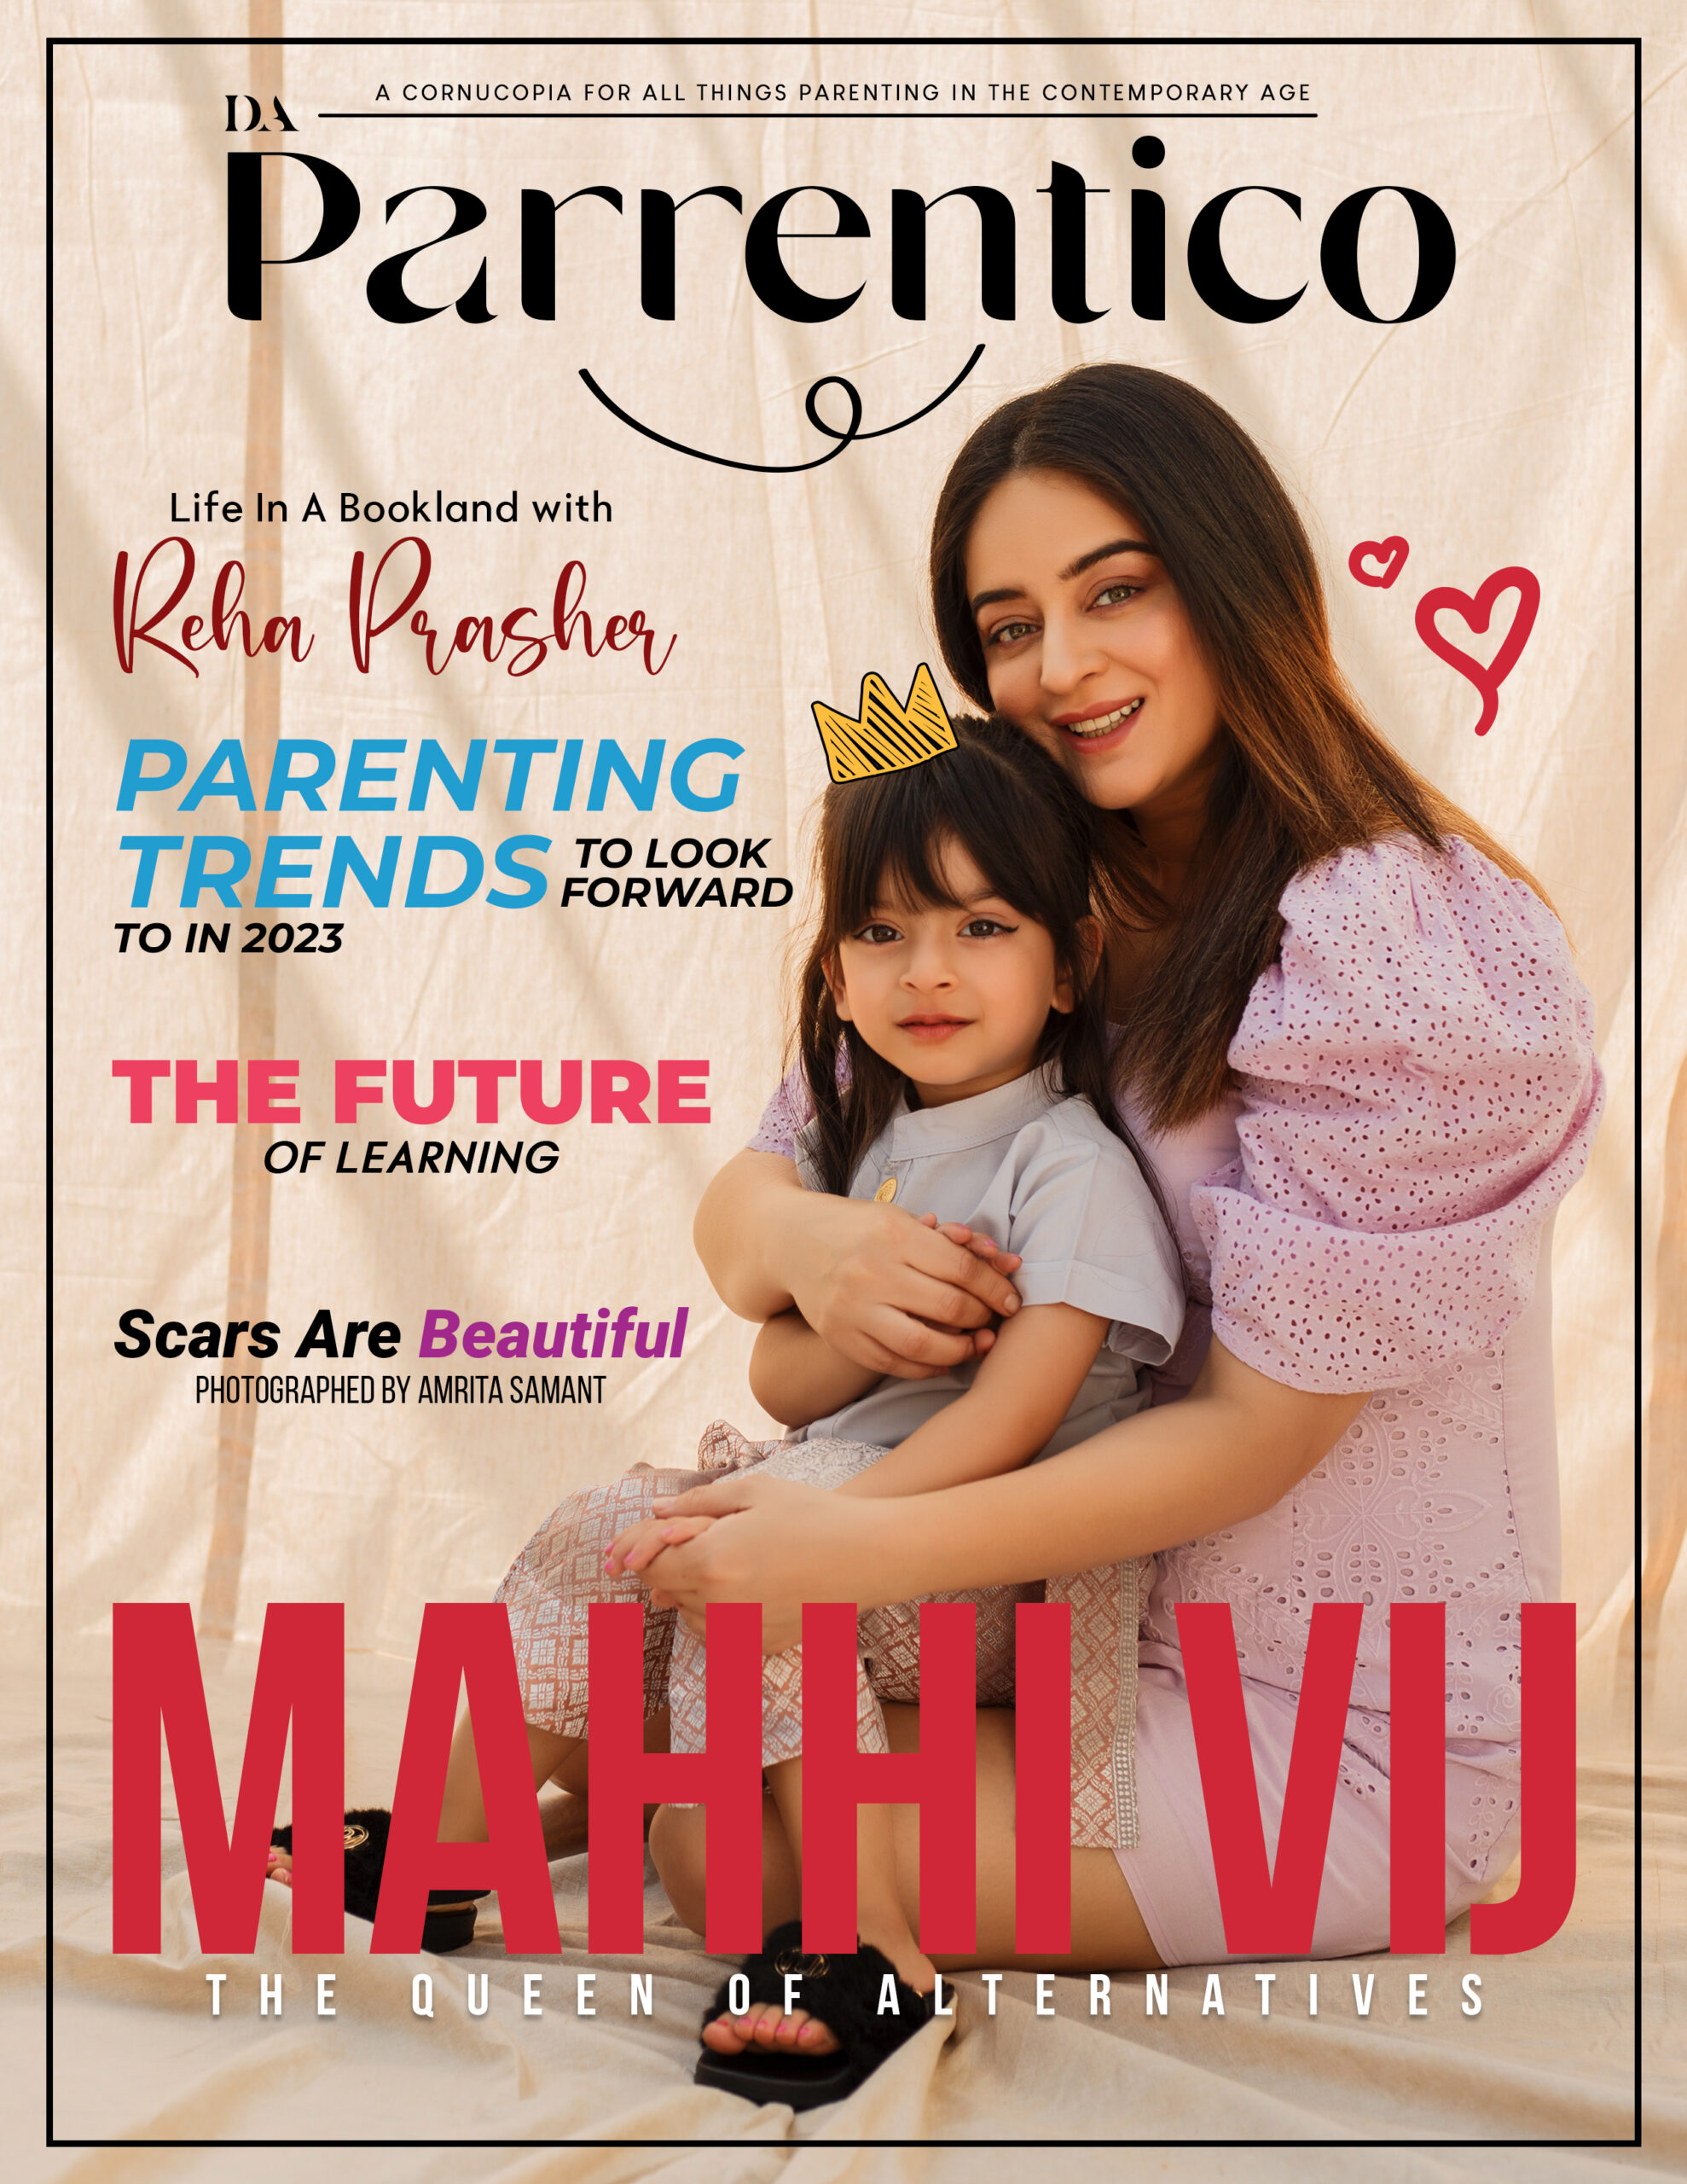 November Da Parrentico Magazine Cover with Mahhi Vij